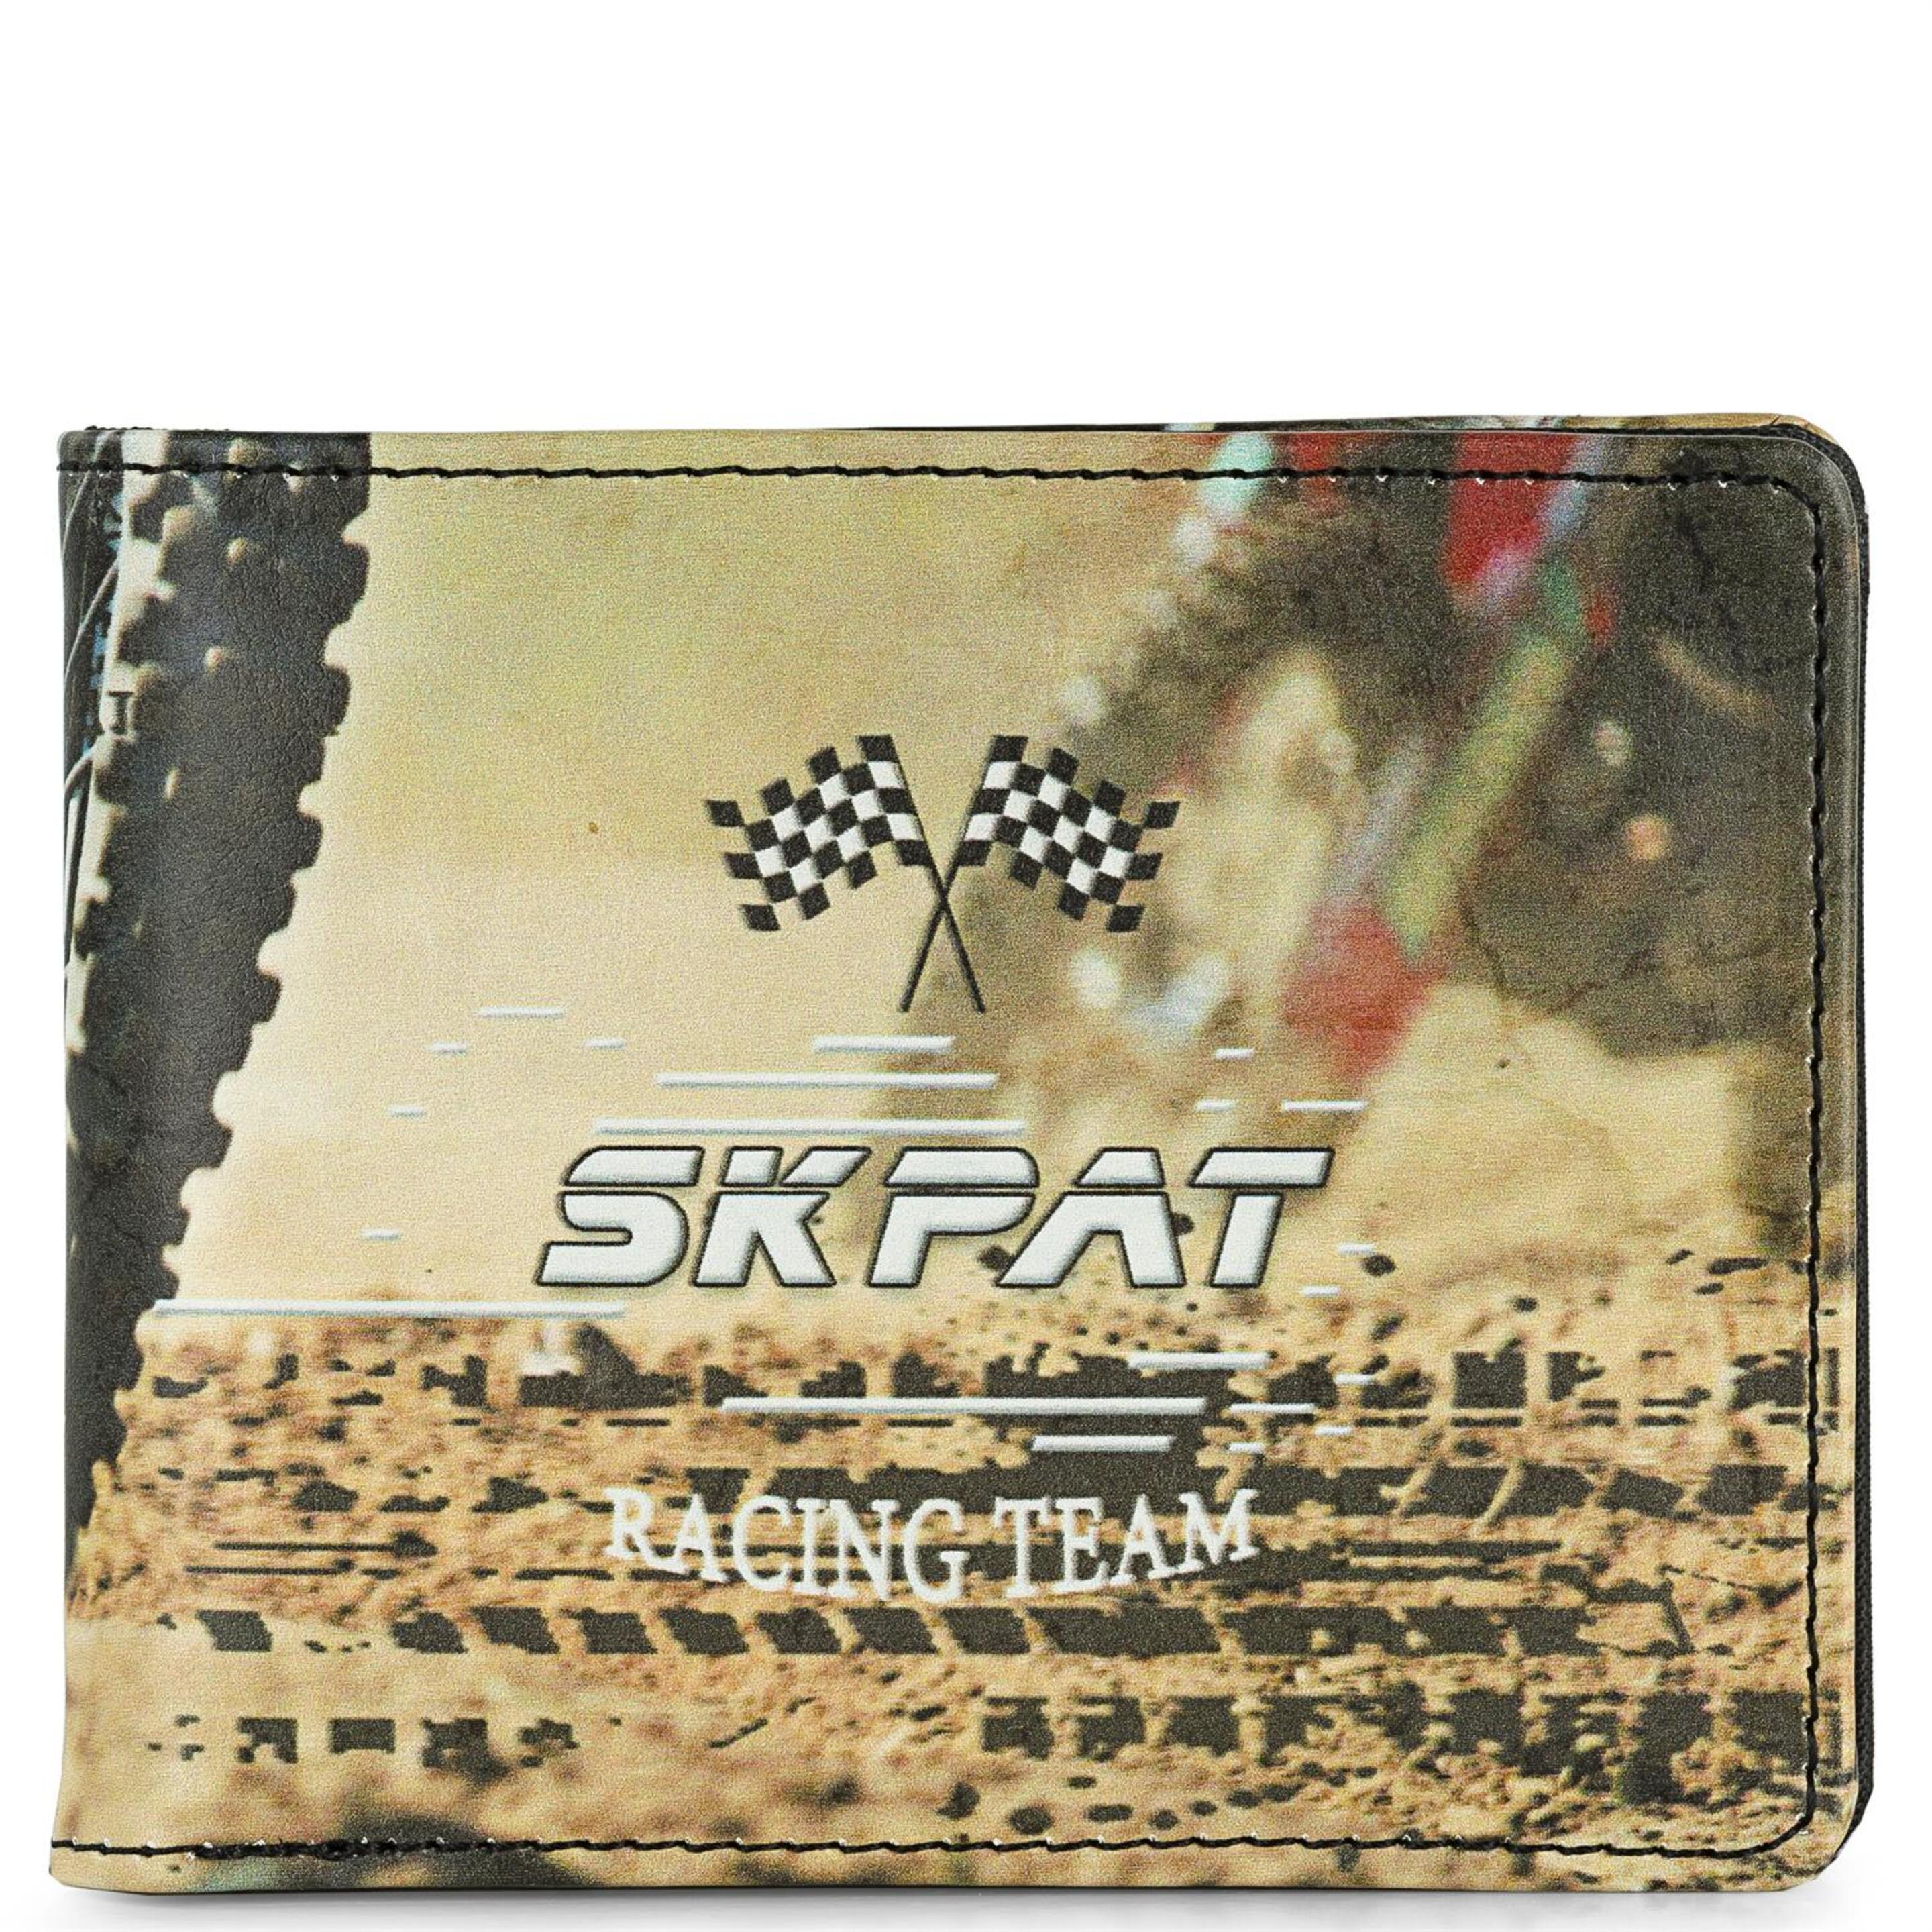 Carteira Skpat Racing Team - multicolor - 